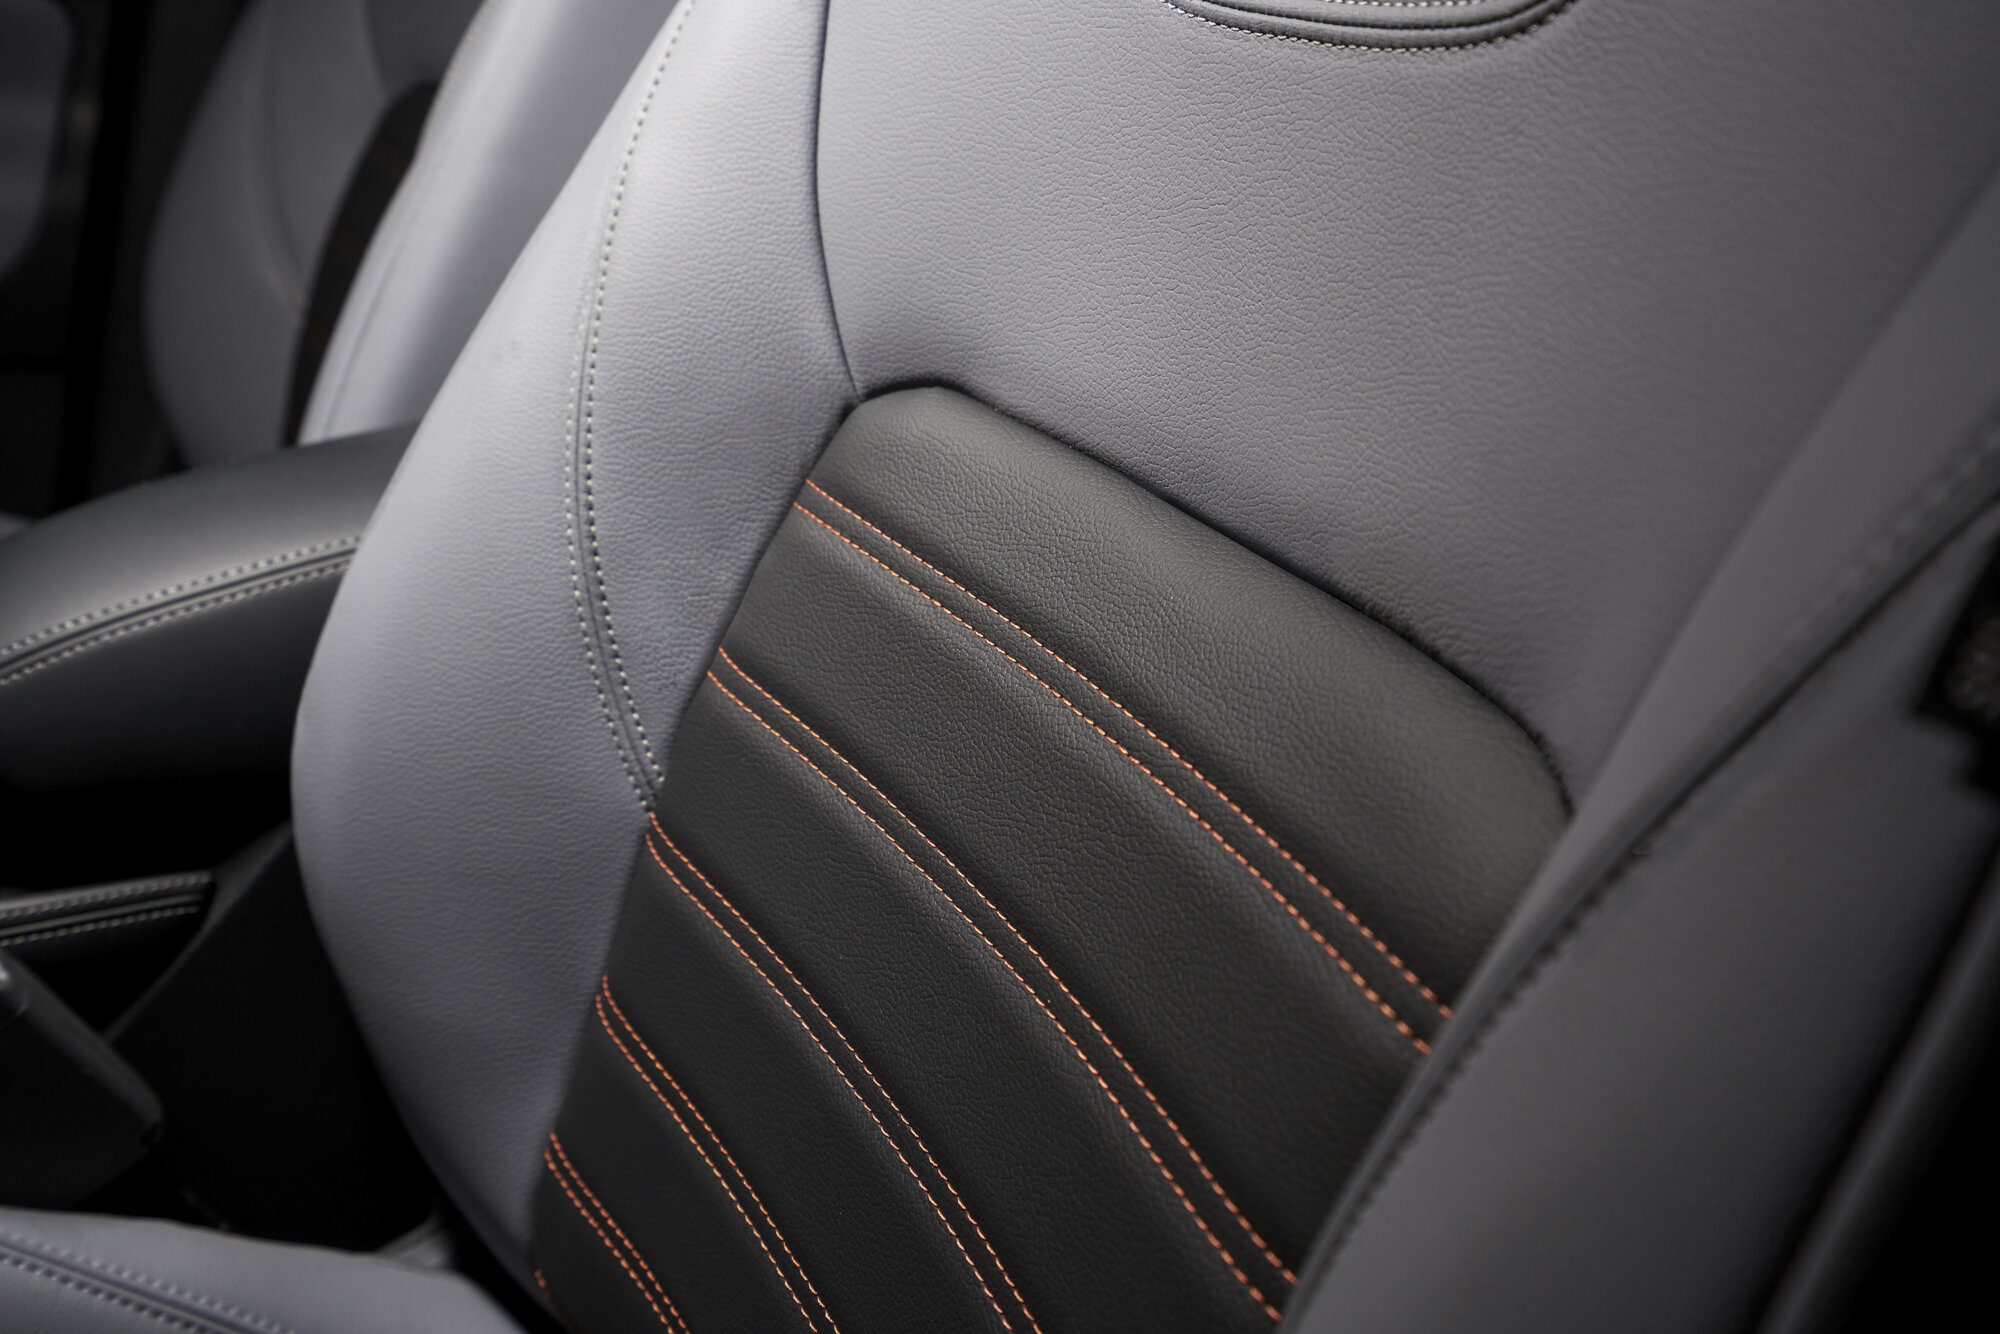  Nissan Sentra Stitching Detail 